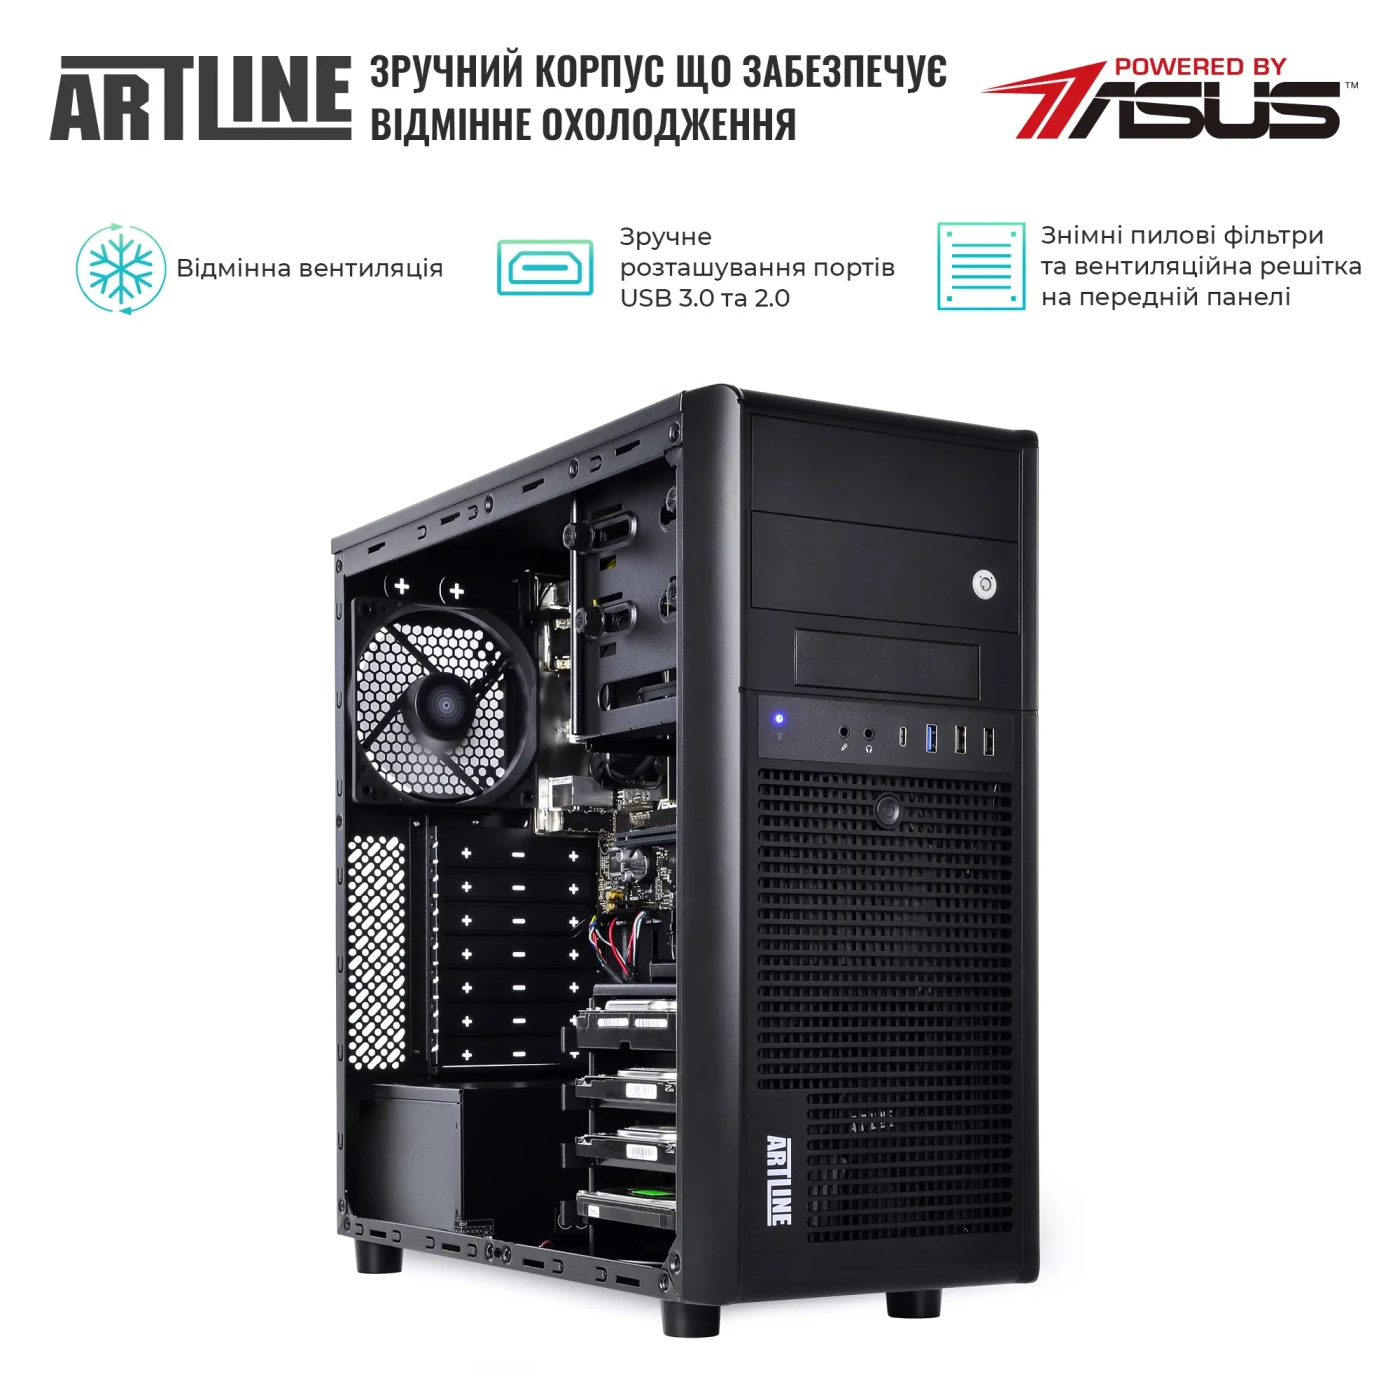 Купити Сервер ARTLINE Business T35v15 - фото 3